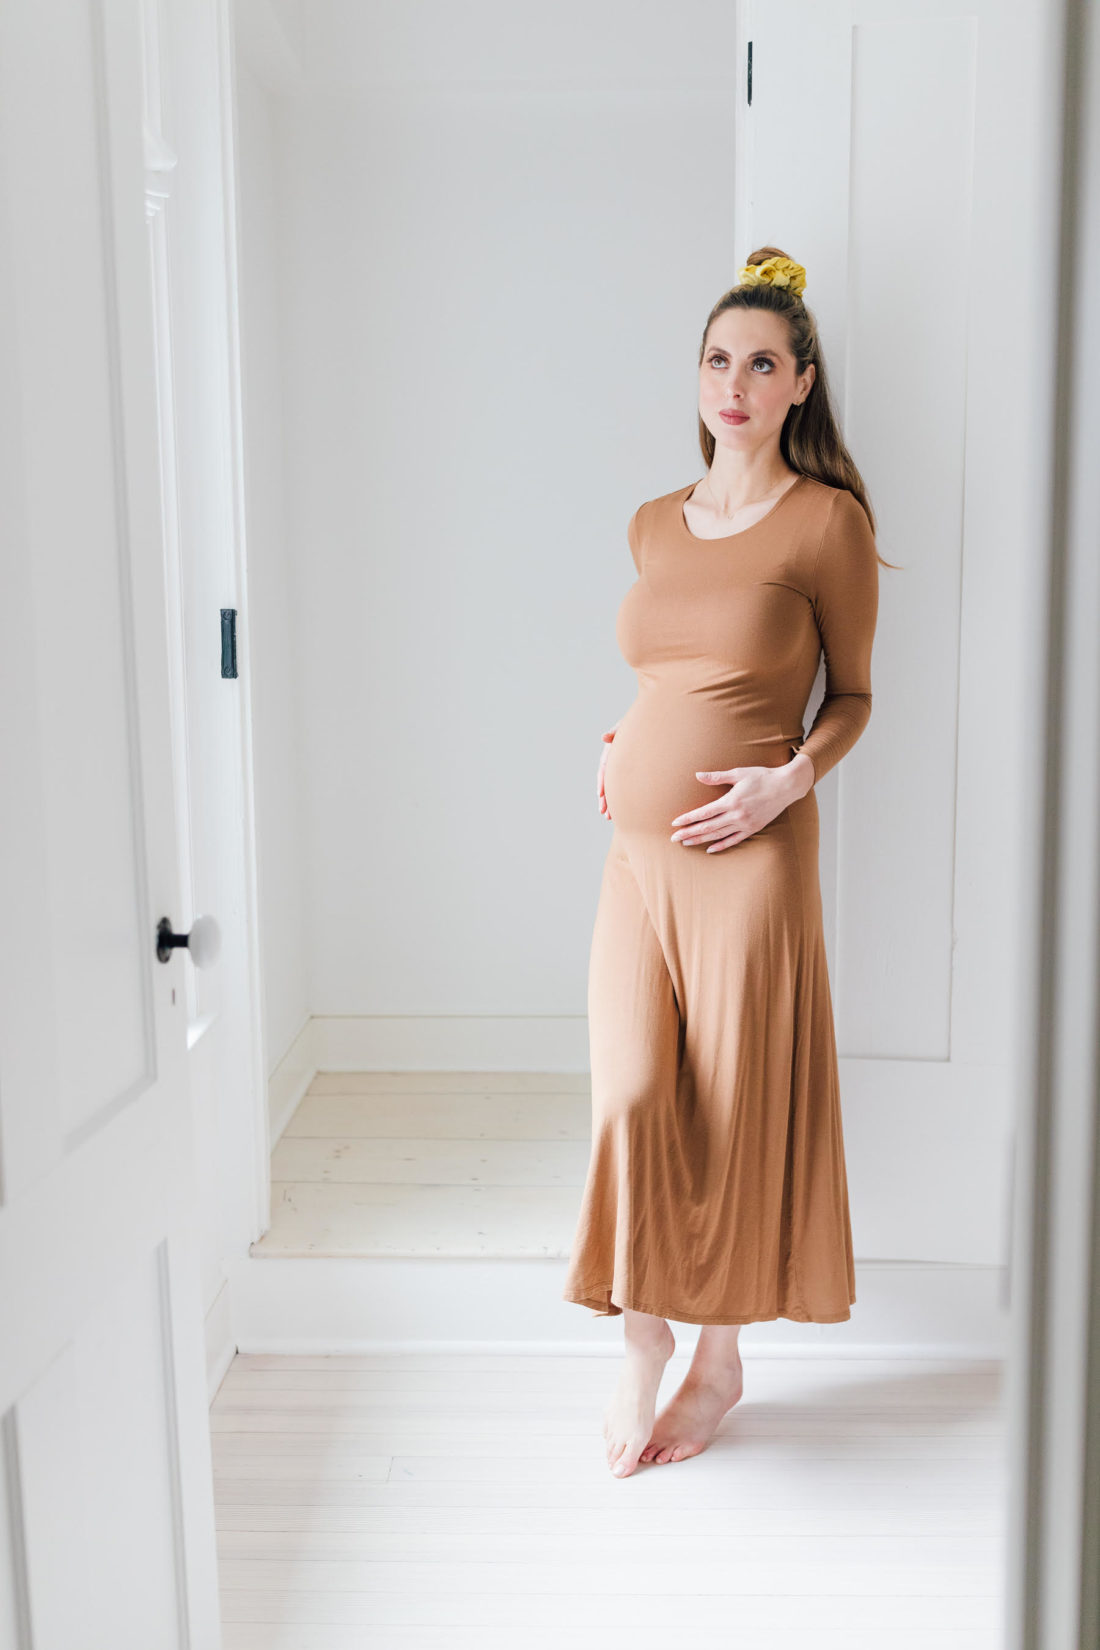 Blogger Eva Amurri shares 5 Major Pregnancy No No's You Might Not Have Known